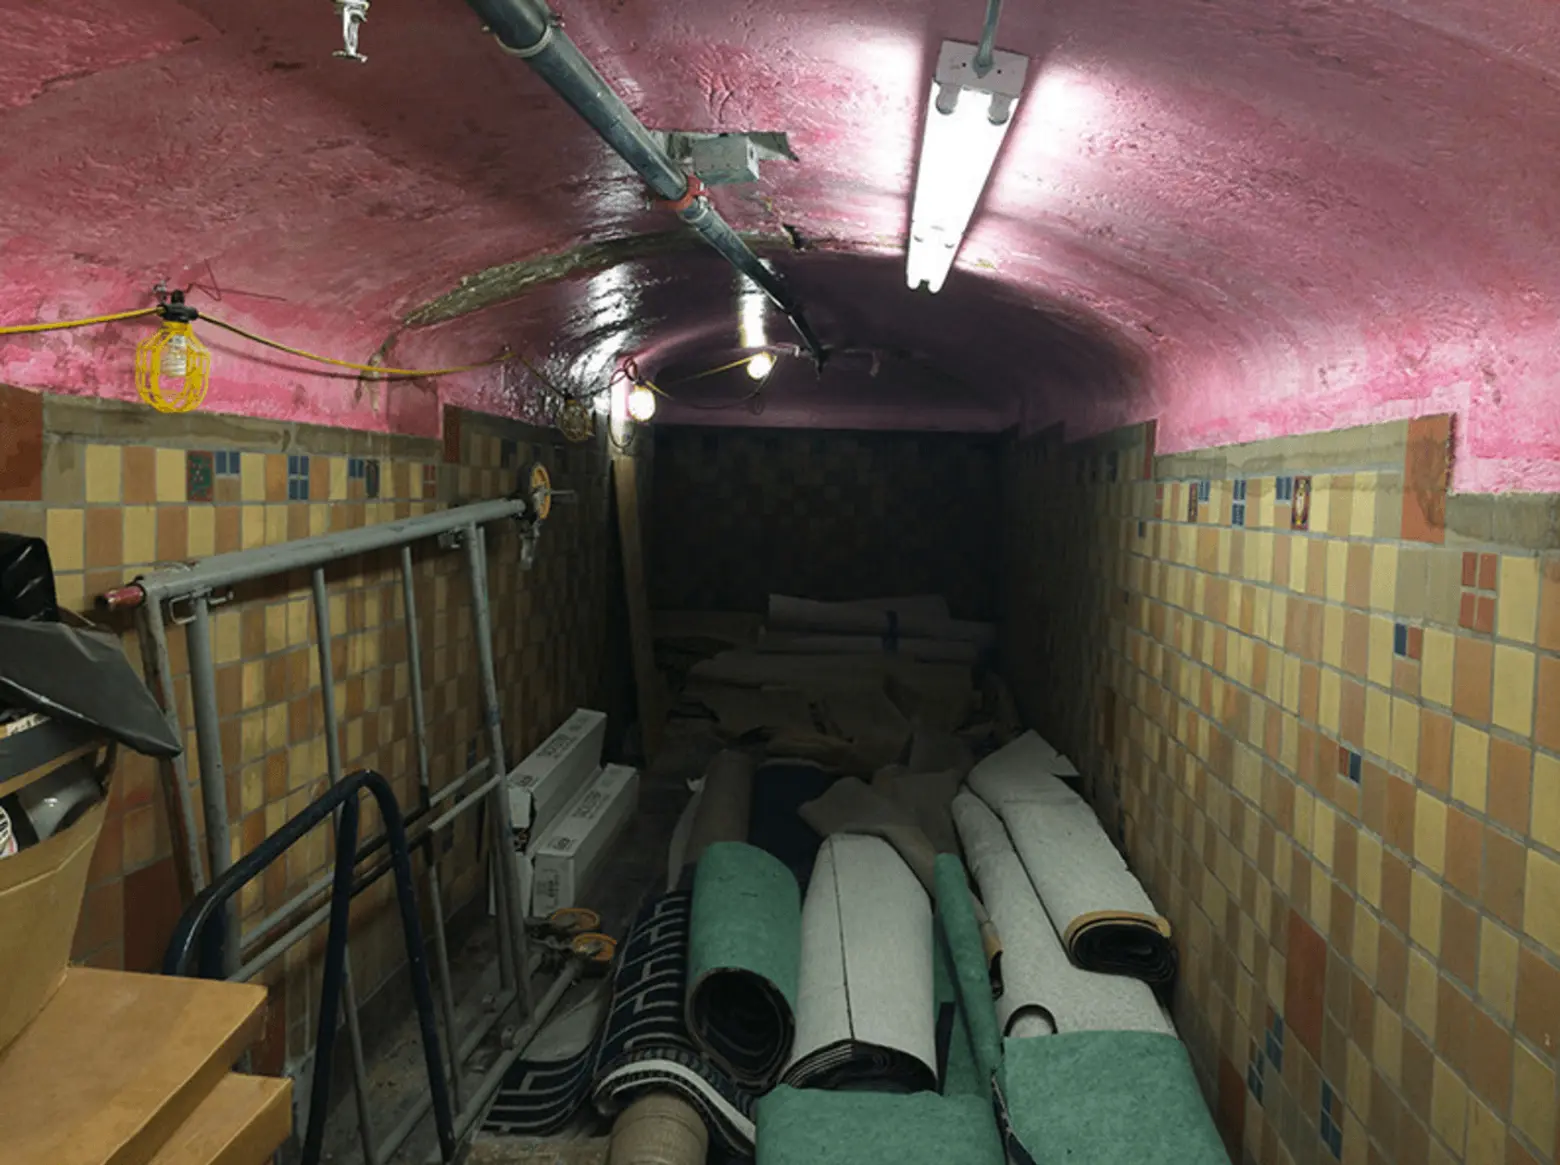 New Yorker Hotel Secret Tunnel